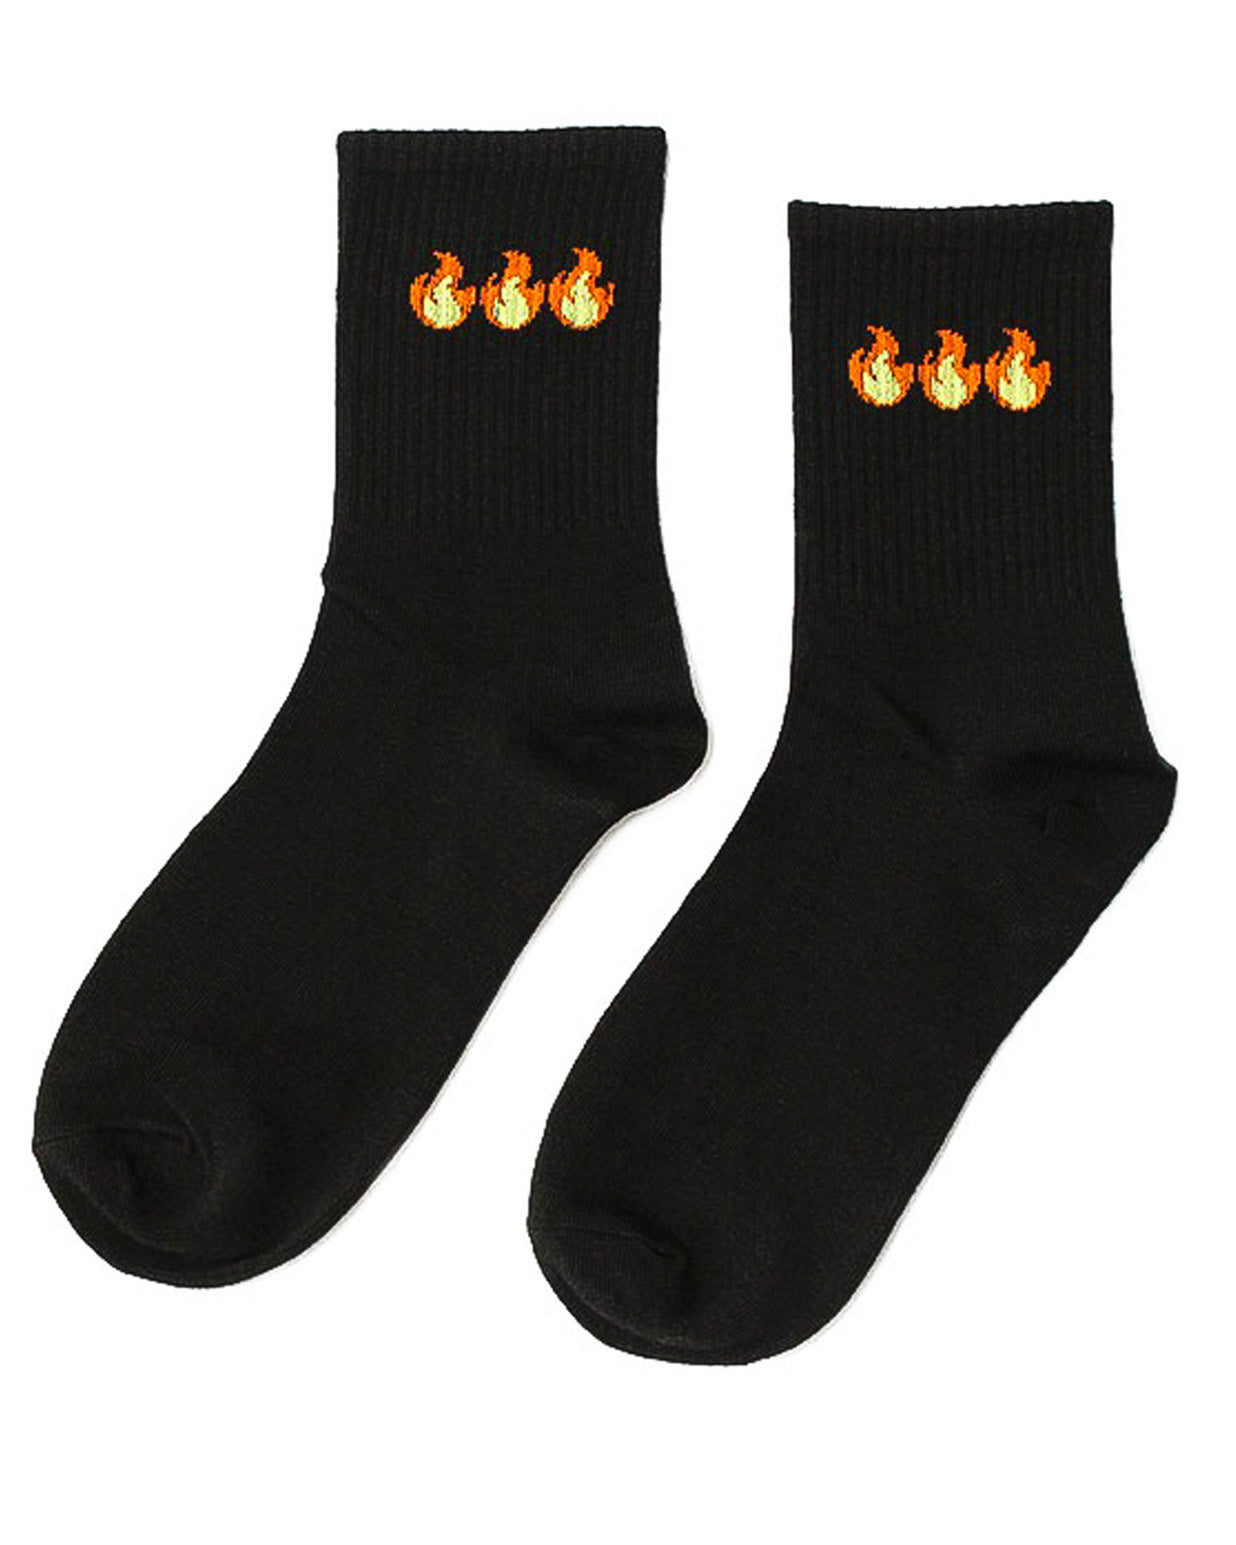 Hot Stuff Socks - Black - Shoppe 815